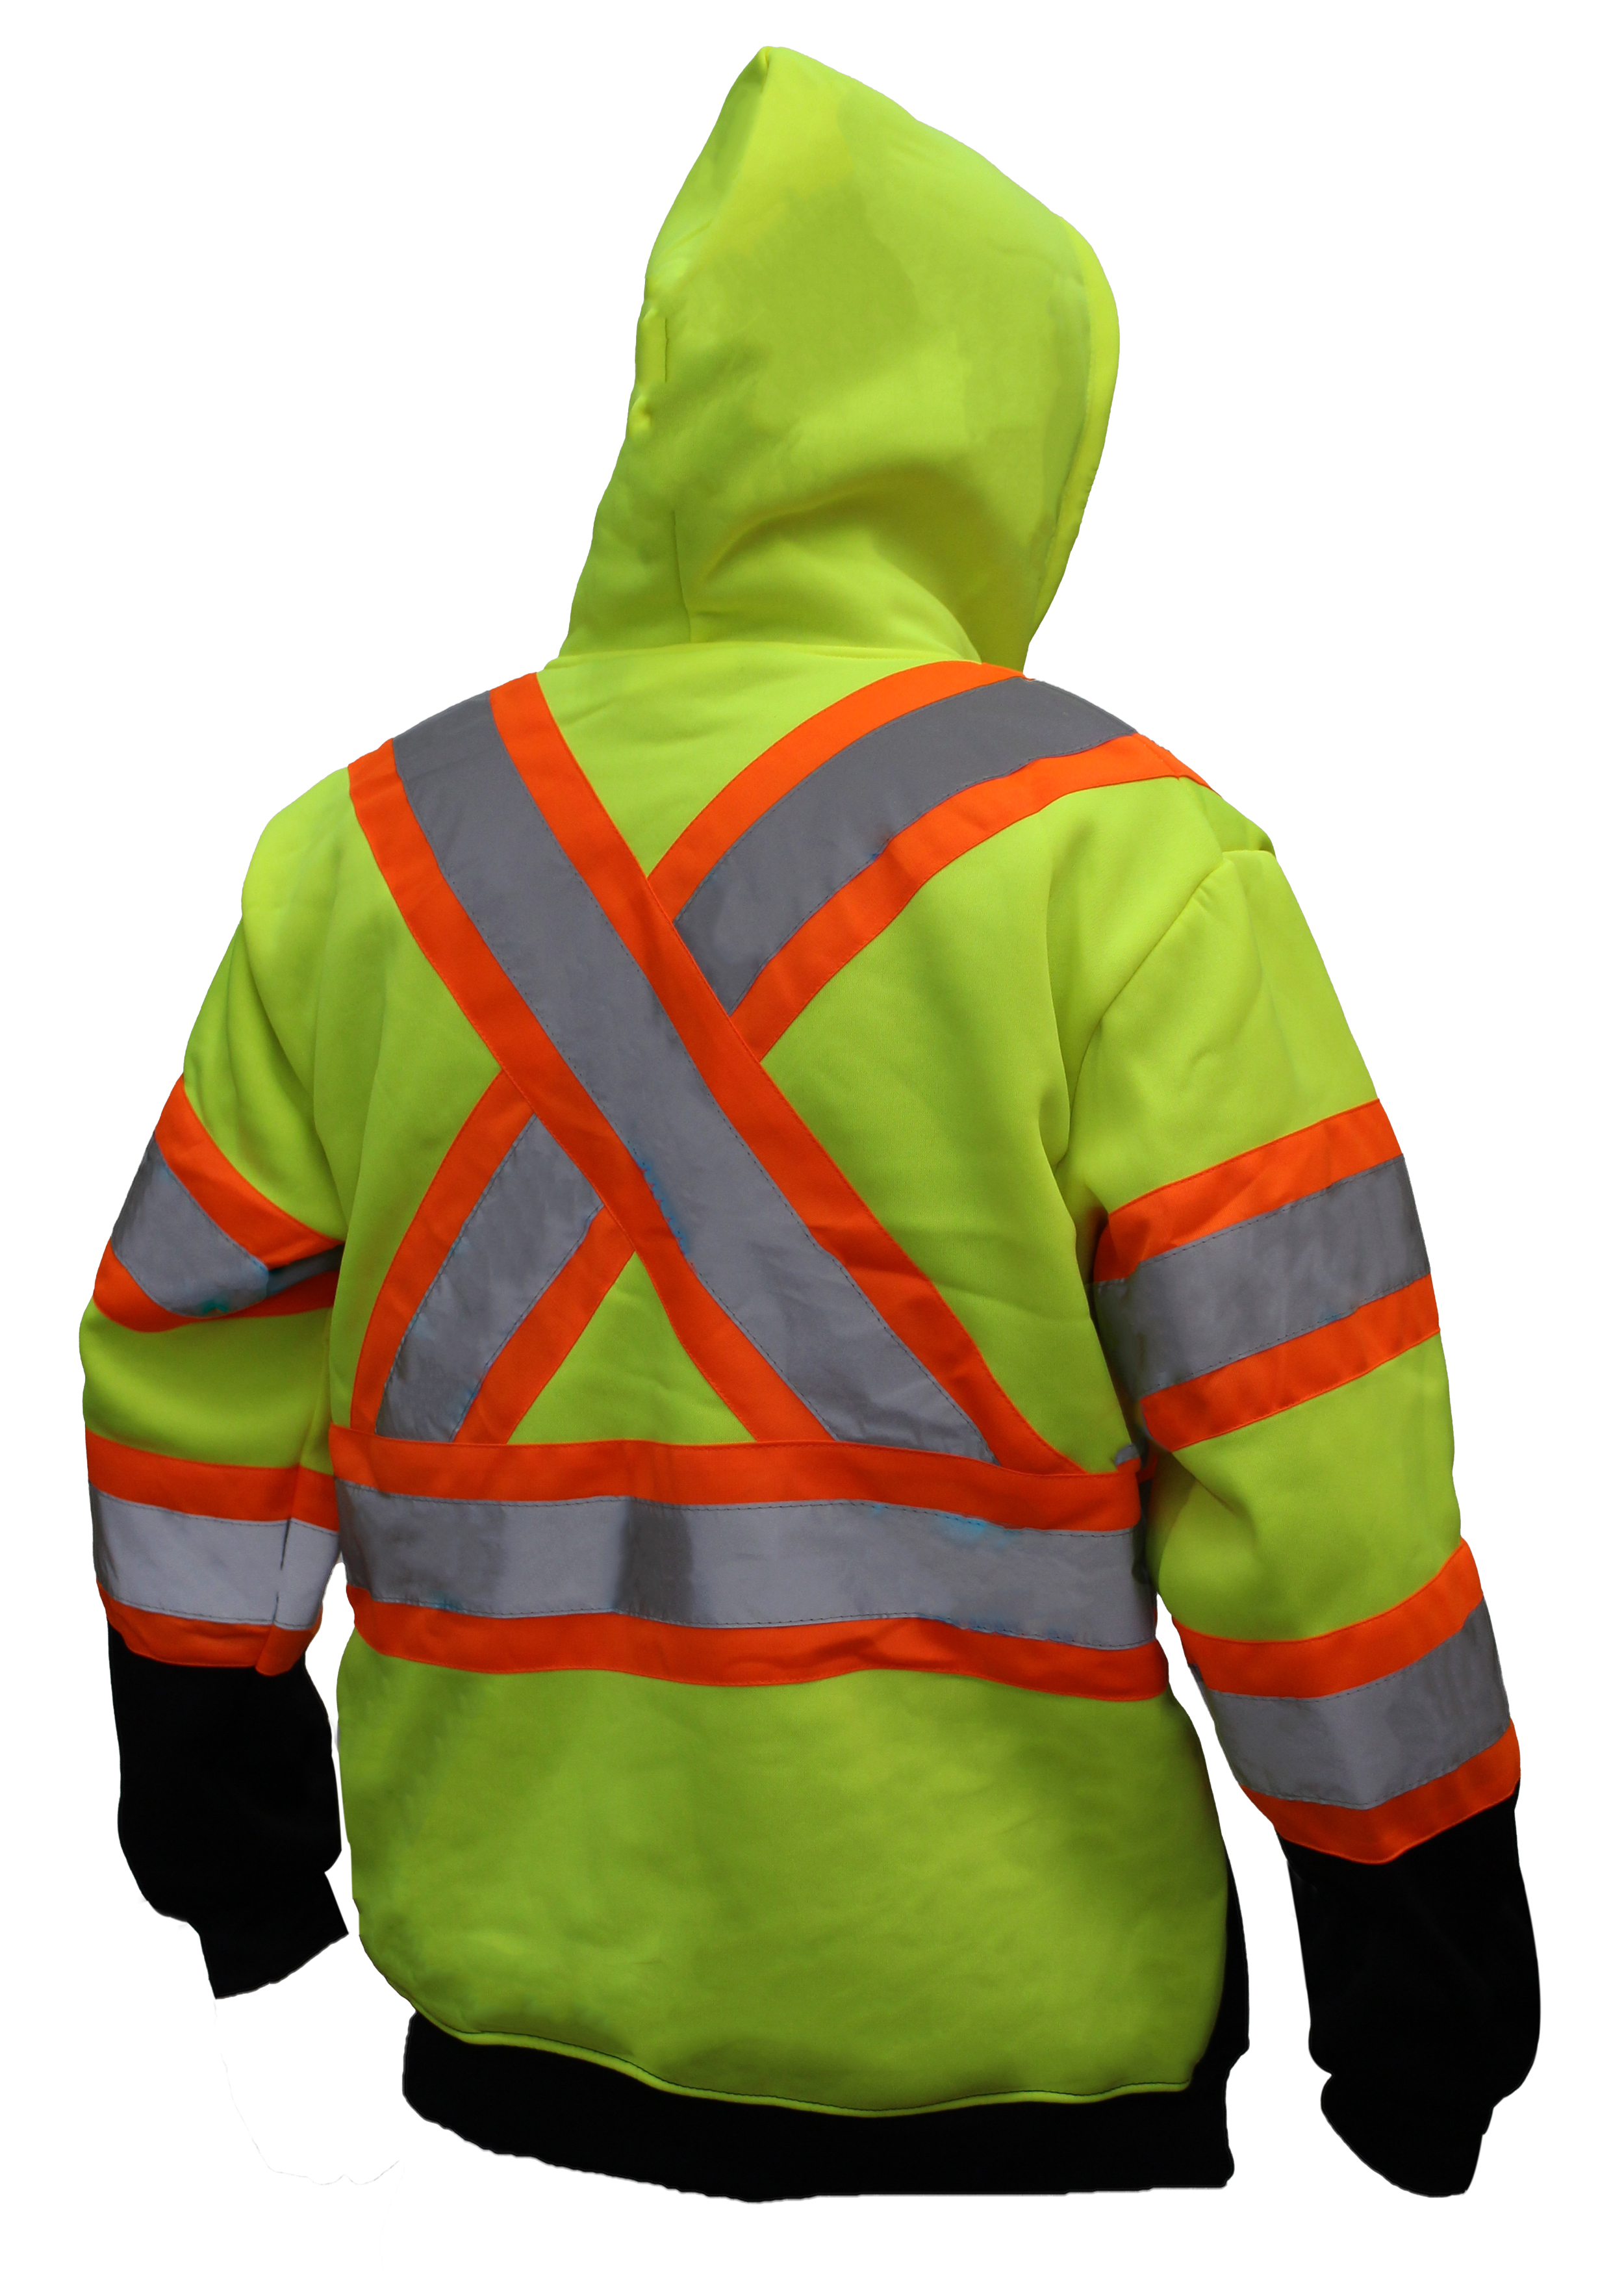 Troy Safety Hi-Viz Workwear, Men's ANSI Class High Visibility Class  Sweatshirt, Full Zip Hooded, Lightweight, Black Bottom with X pattern